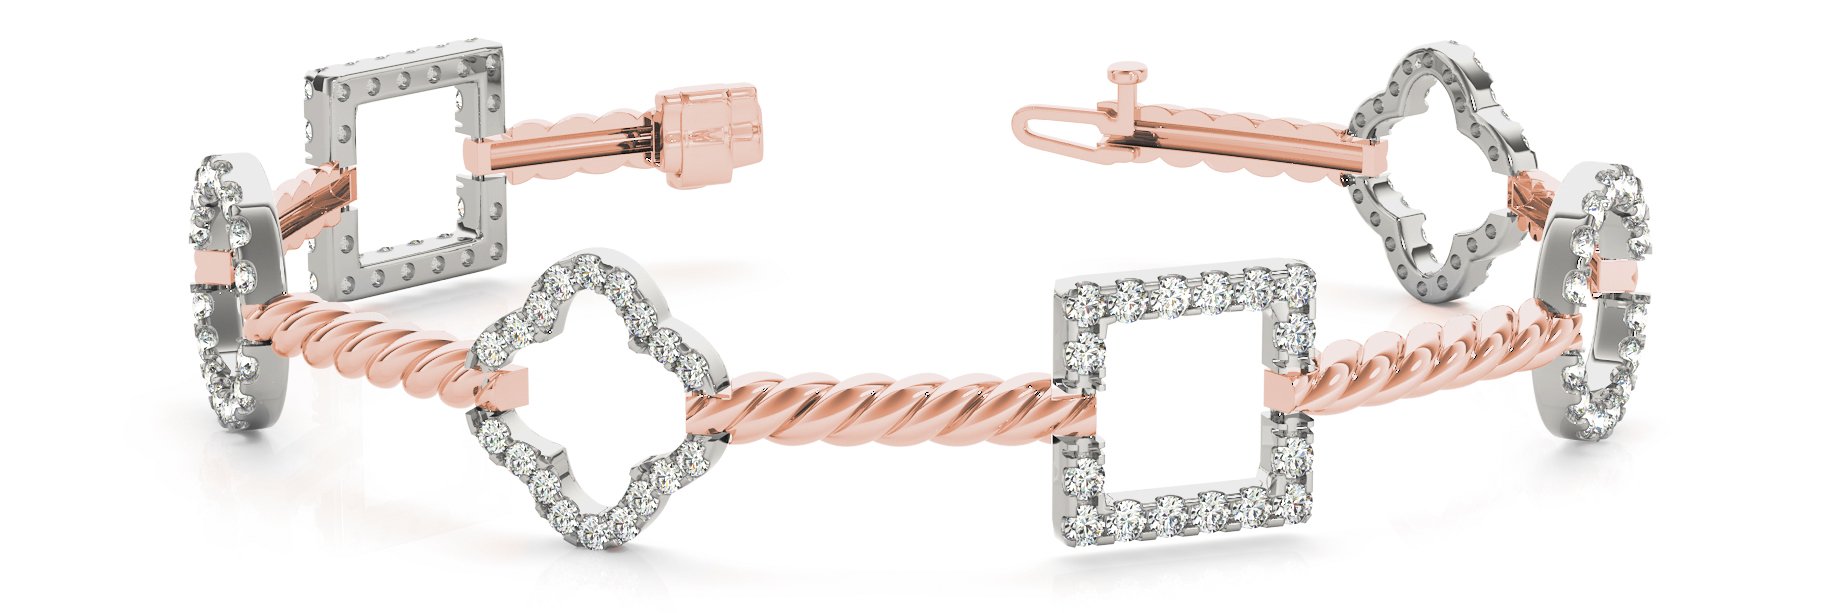 Fancy Diamond Bracelet Ladies 1.17ct tw - 14kt Gold